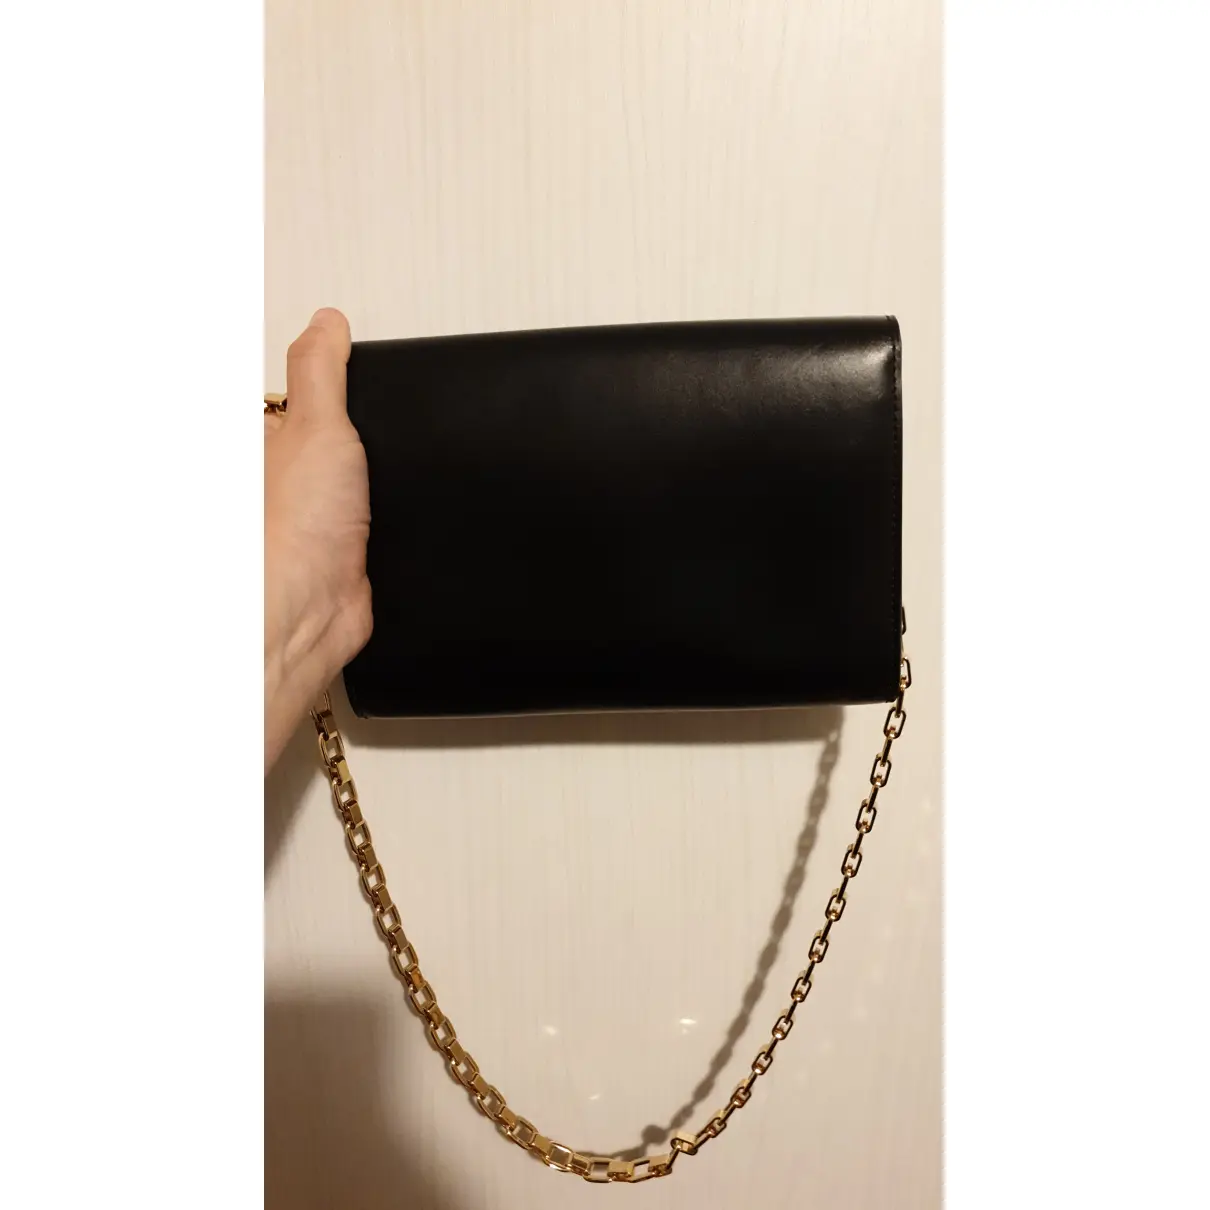 Buy Louis Vuitton Louise leather clutch bag online